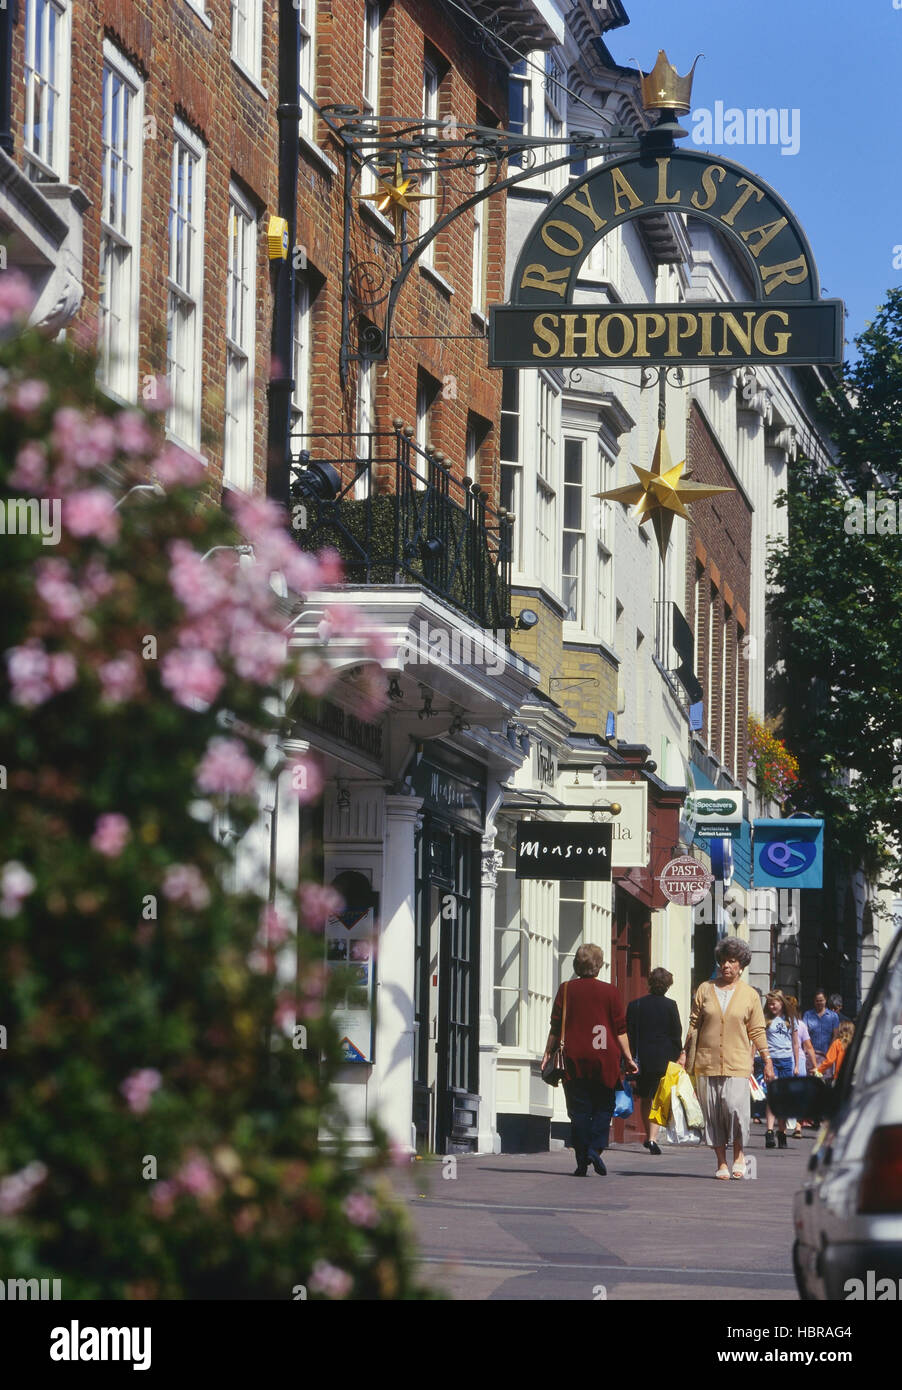 Royal Star shopping mall entrance. High Street. Maidstone. Kent. England. UK Stock Photo